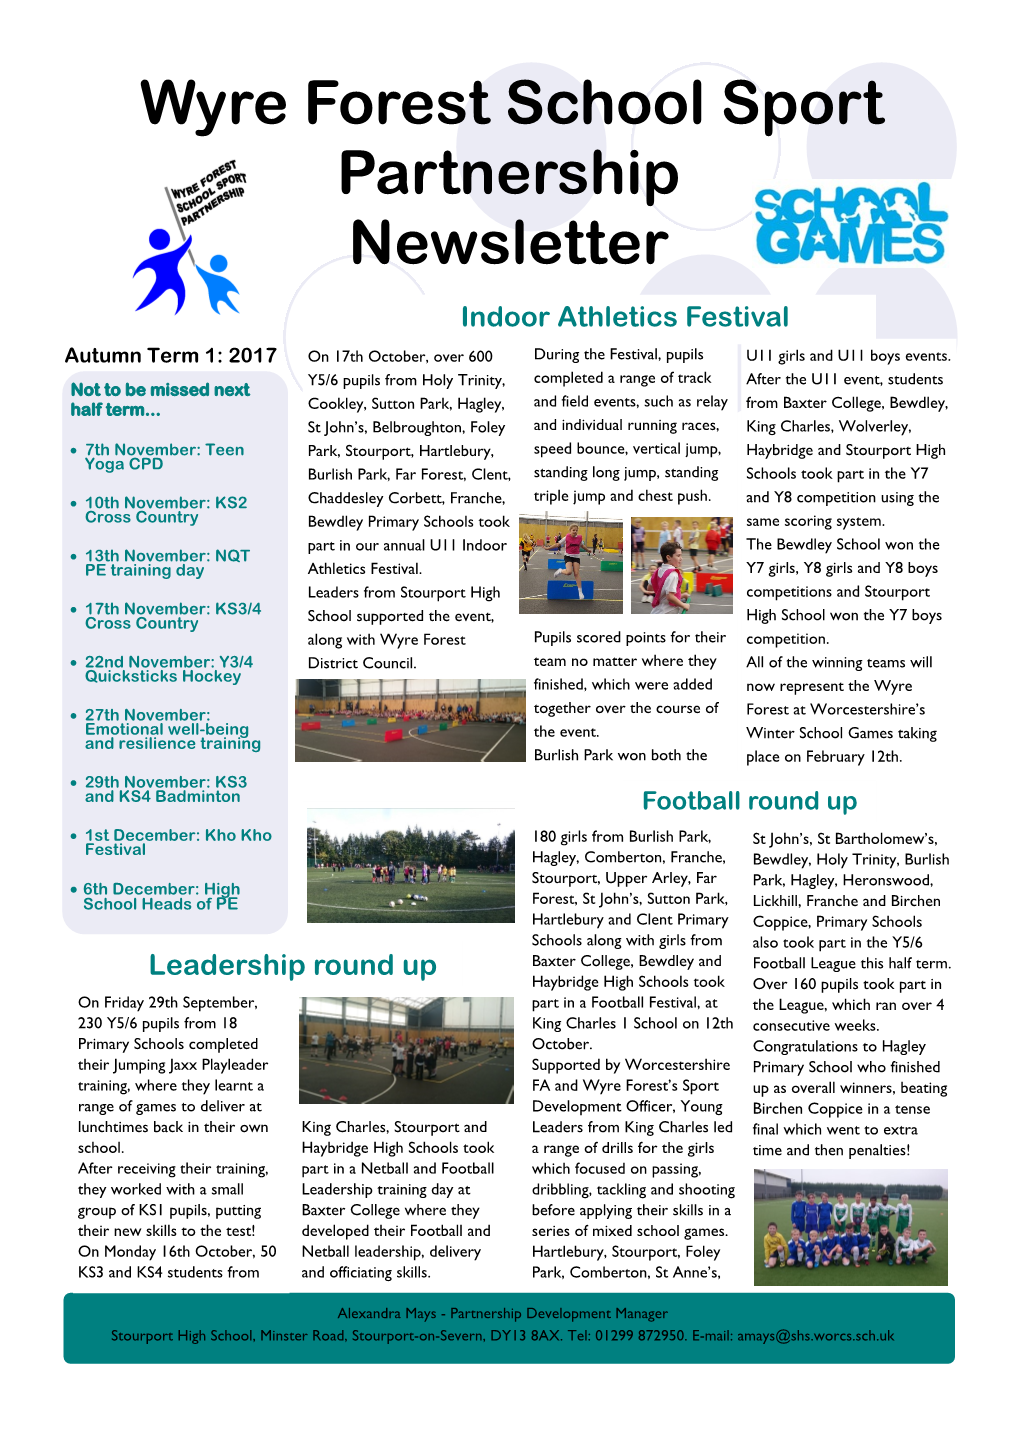 Wyre Forest School Sport Partnership Newsletter